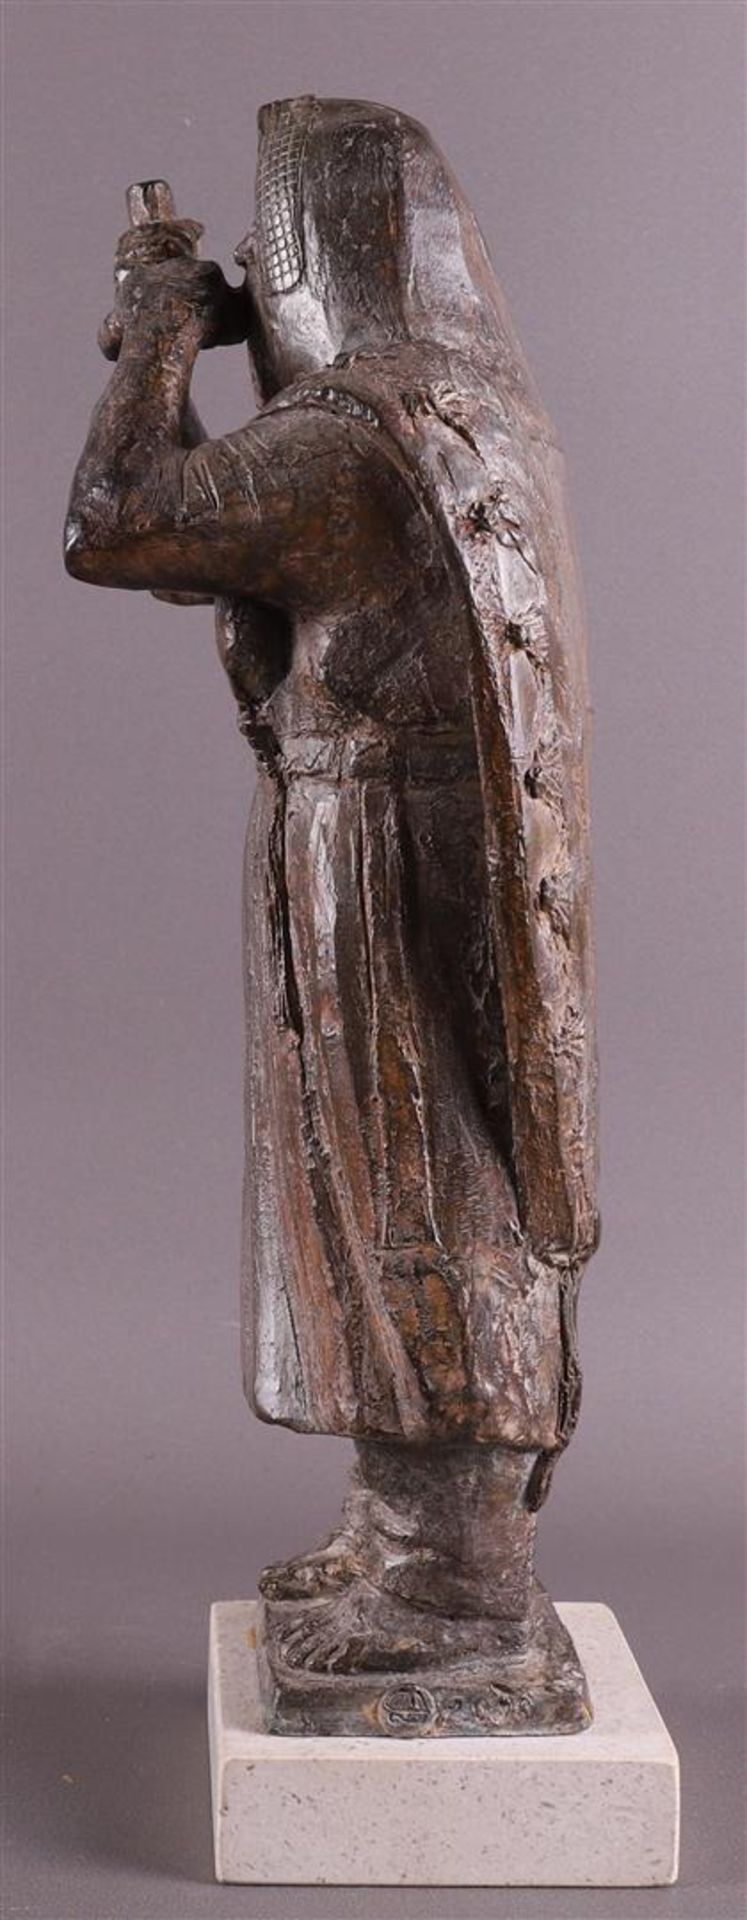 Djanashvili, Amiran (1962) 'Rosh Hashanah', bronze sculpture. - Image 6 of 6